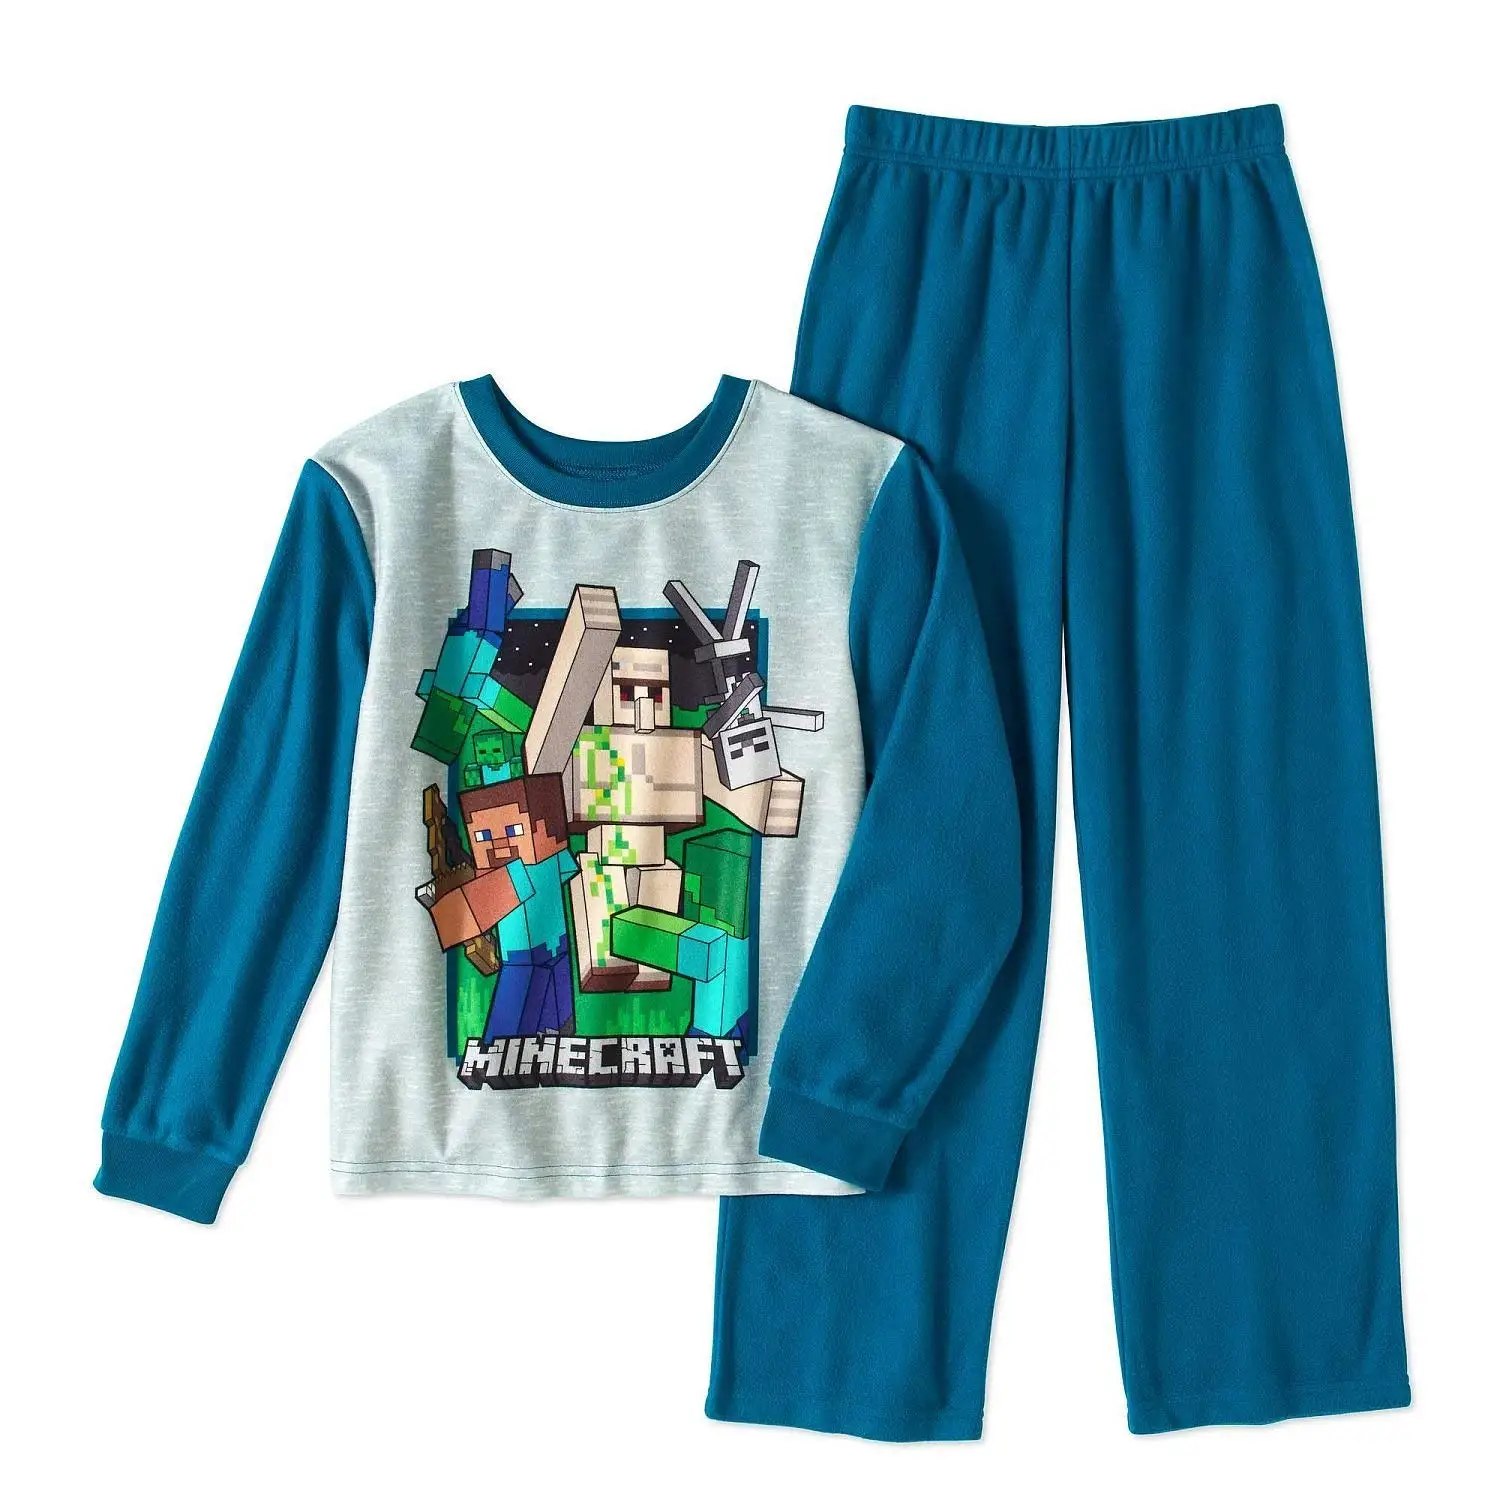 Пижама майнкрафт. Пижама Minecraft для мальчиков. Пижама Minecraft синяя. Майнкрафт одежда пижама. Пижама майнкрафт для мальчиков купить.